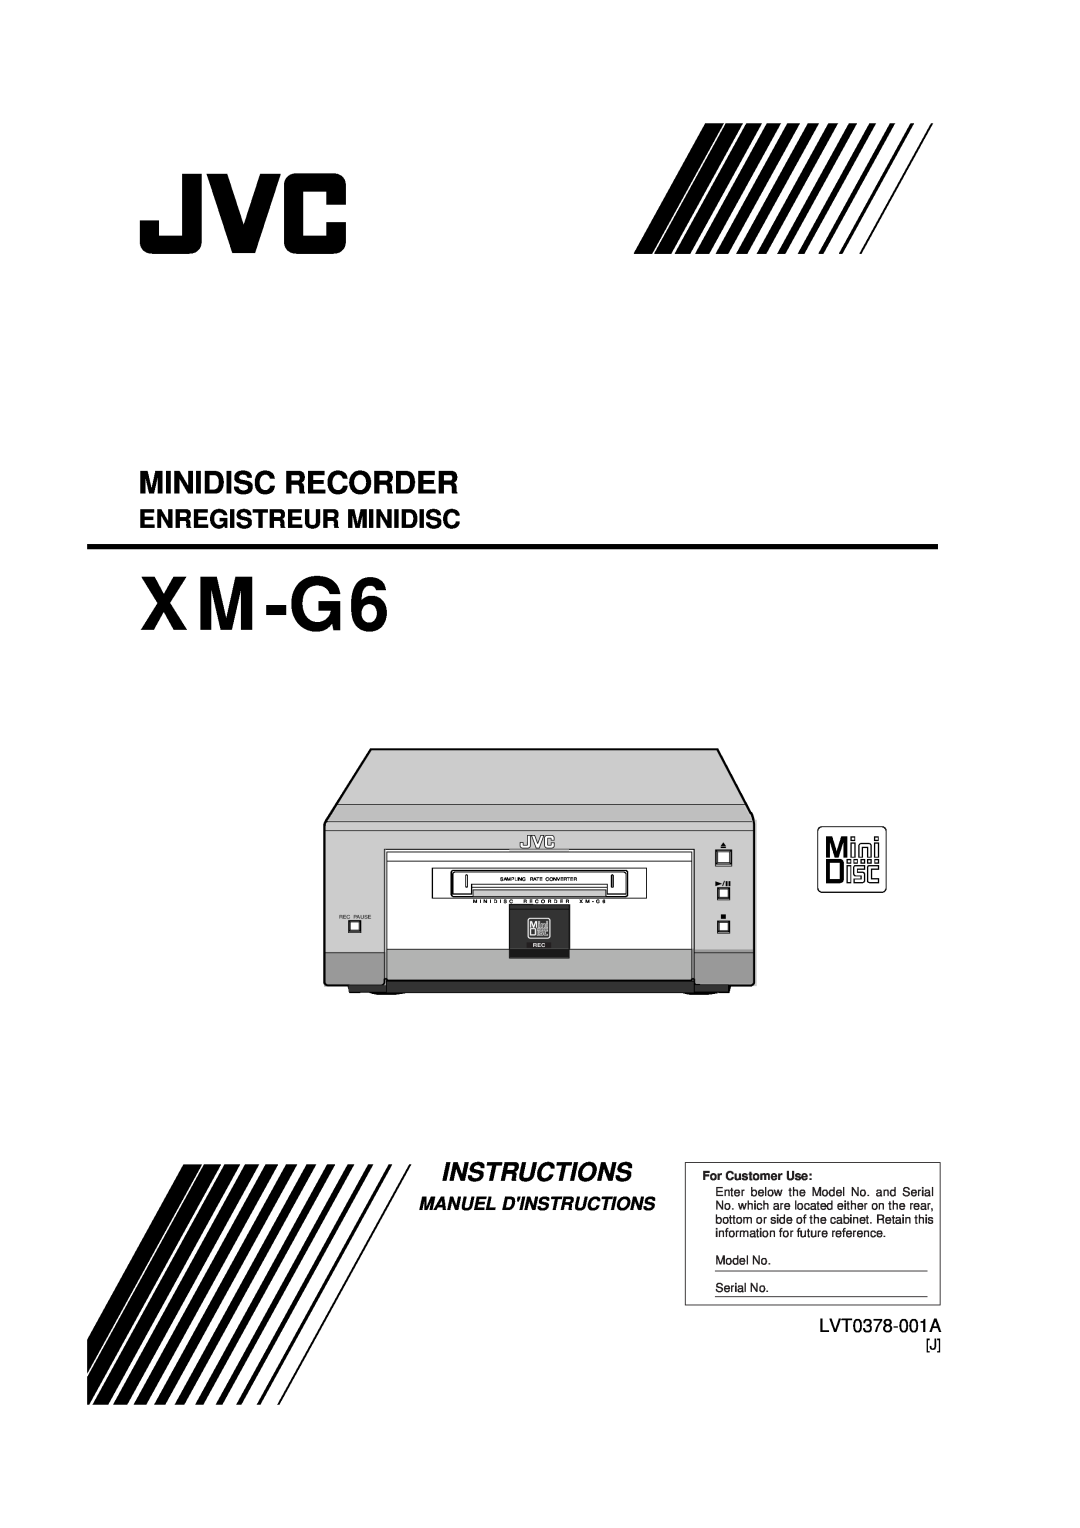 JVC 0200JTMMDWJSCEN manual Enregistreur Minidisc, Instructions, Manuel Dinstructions, LVT0378-001A, XM-G6, Rec Pause 